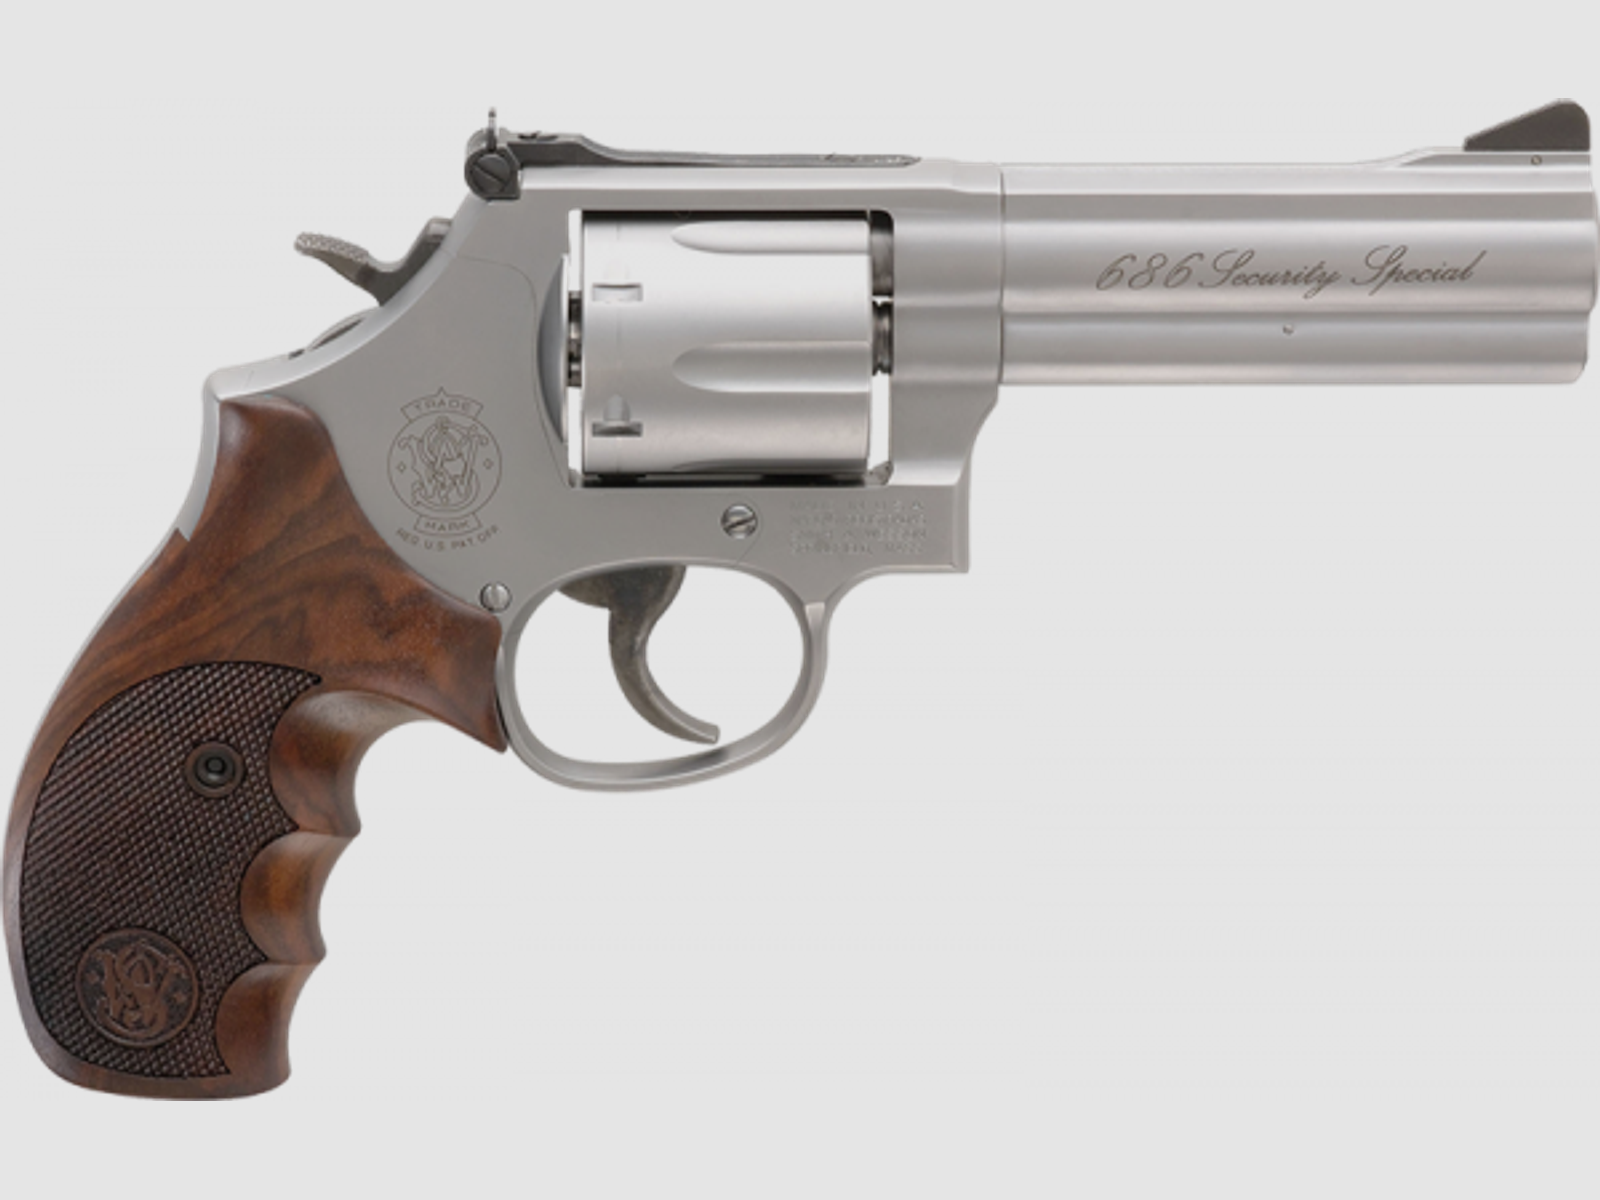 Smith & Wesson Model 686 Security Special Revolver